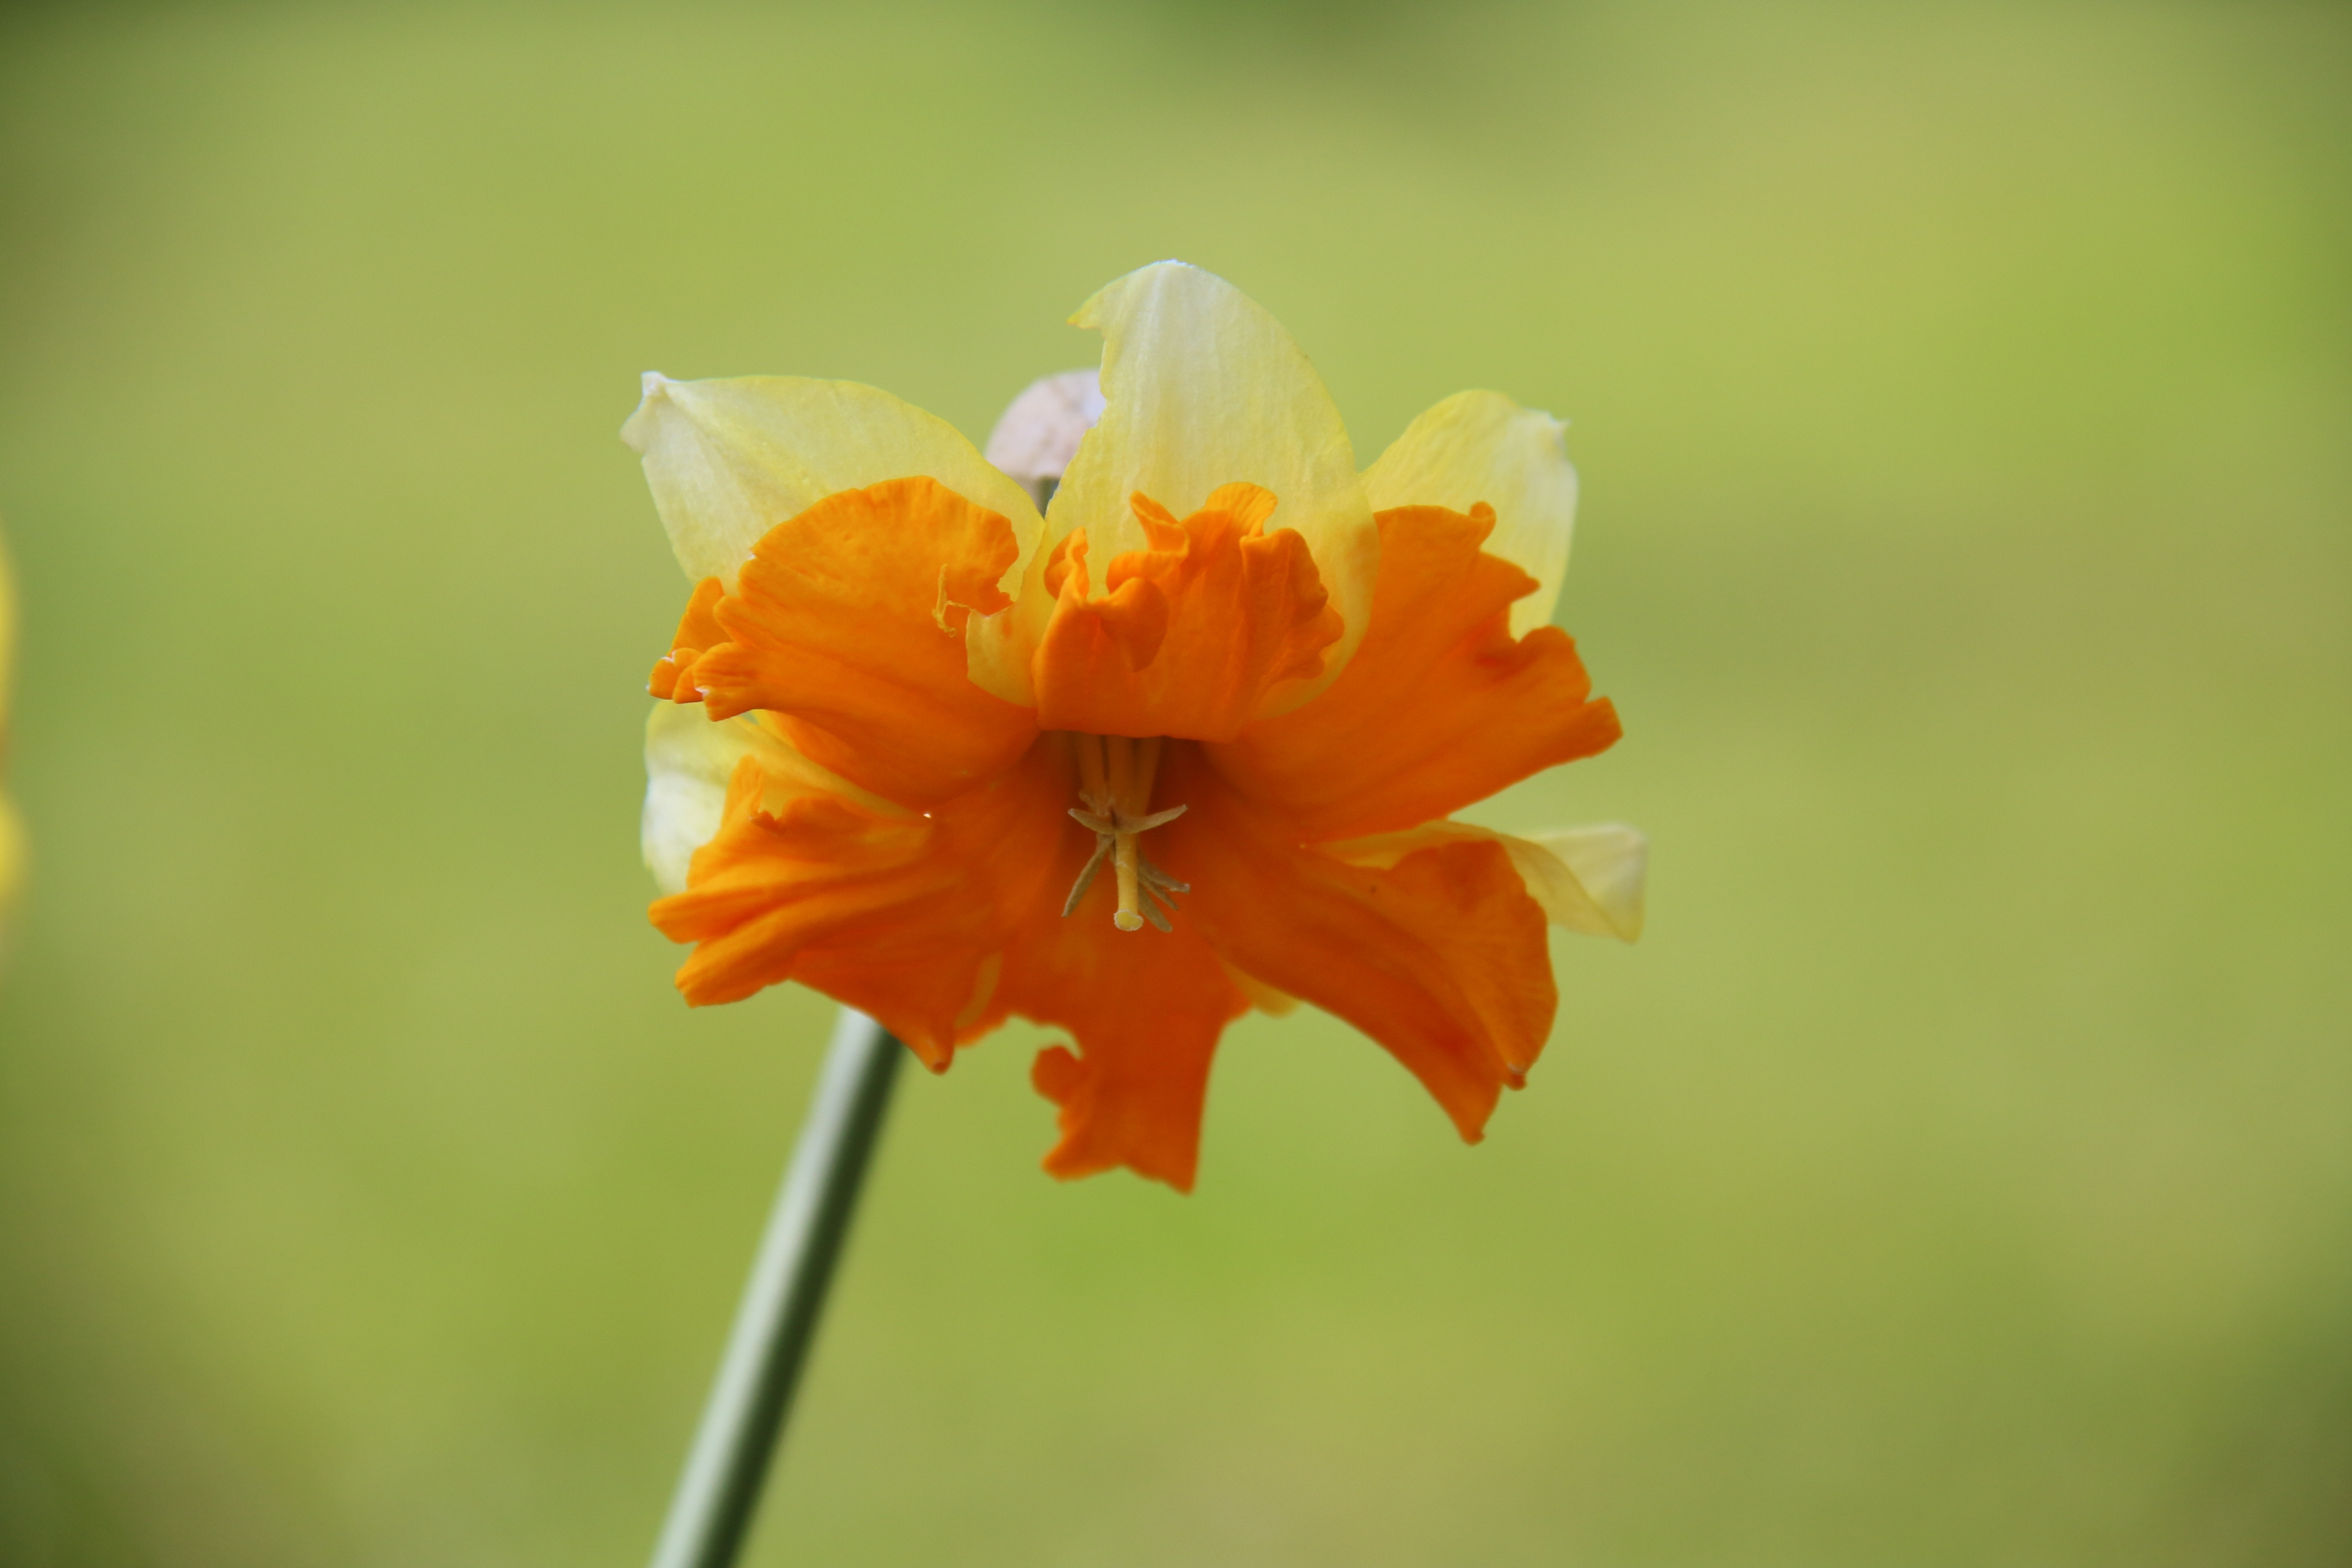 orange and white petaled flower